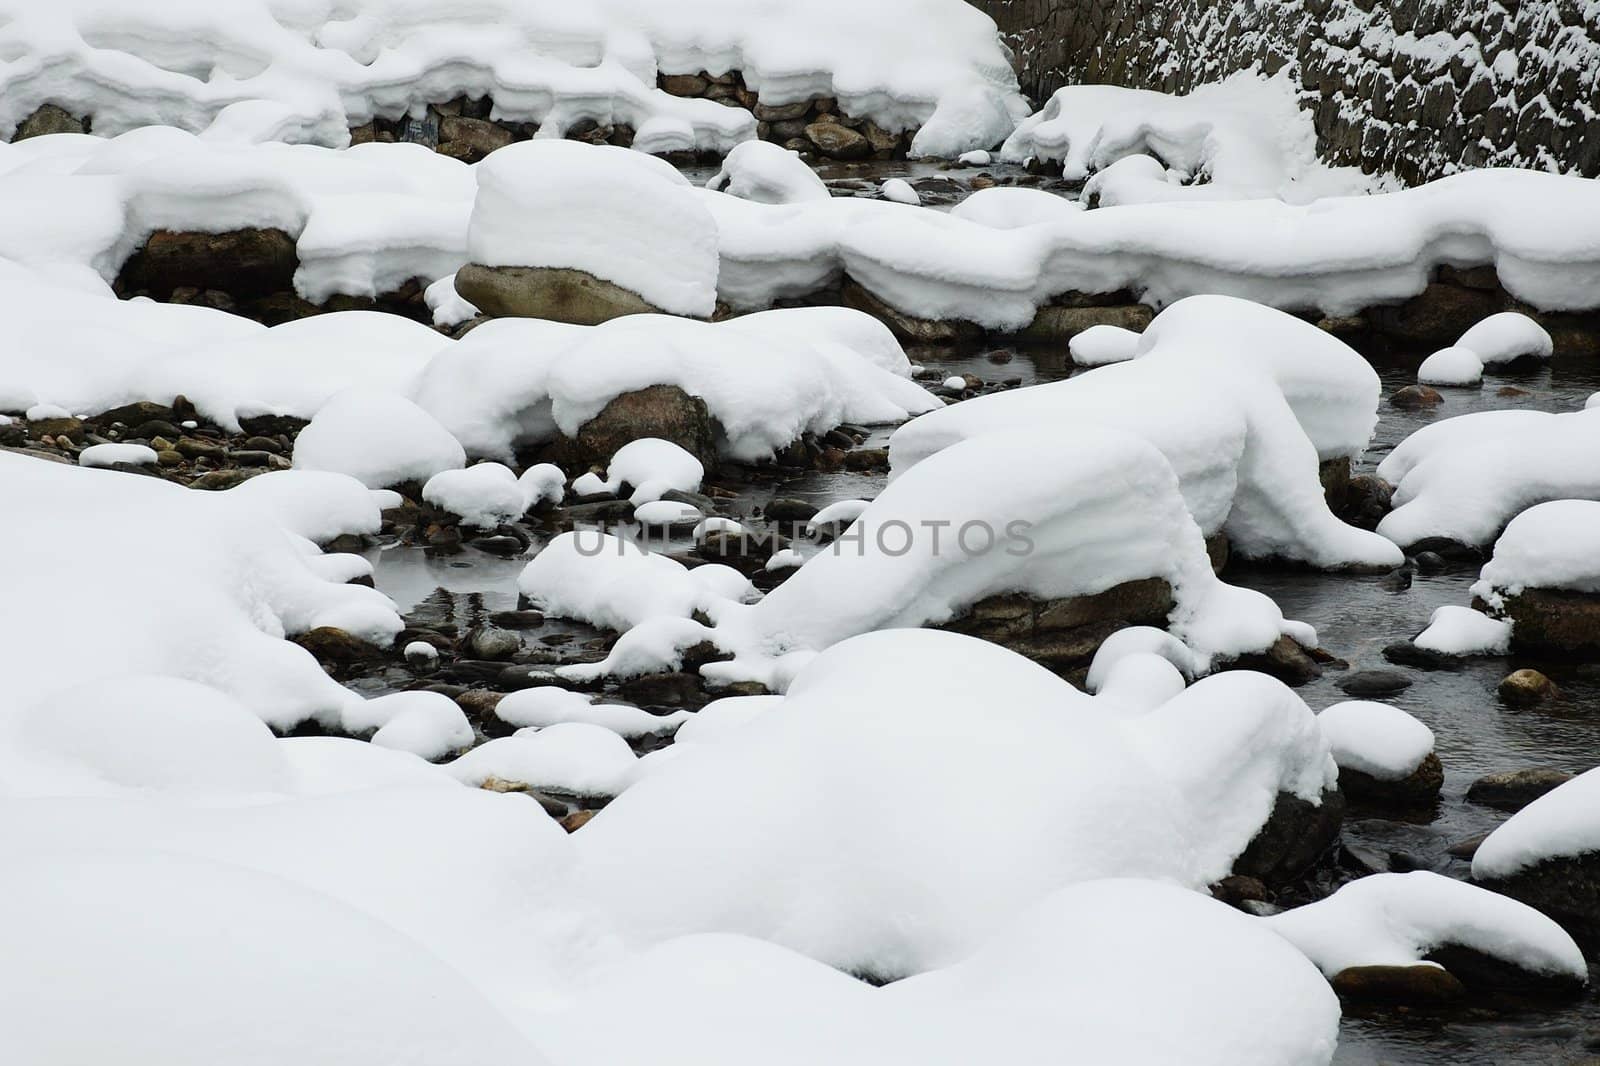 snowy river's stone in czech republic, horizontally framed shot